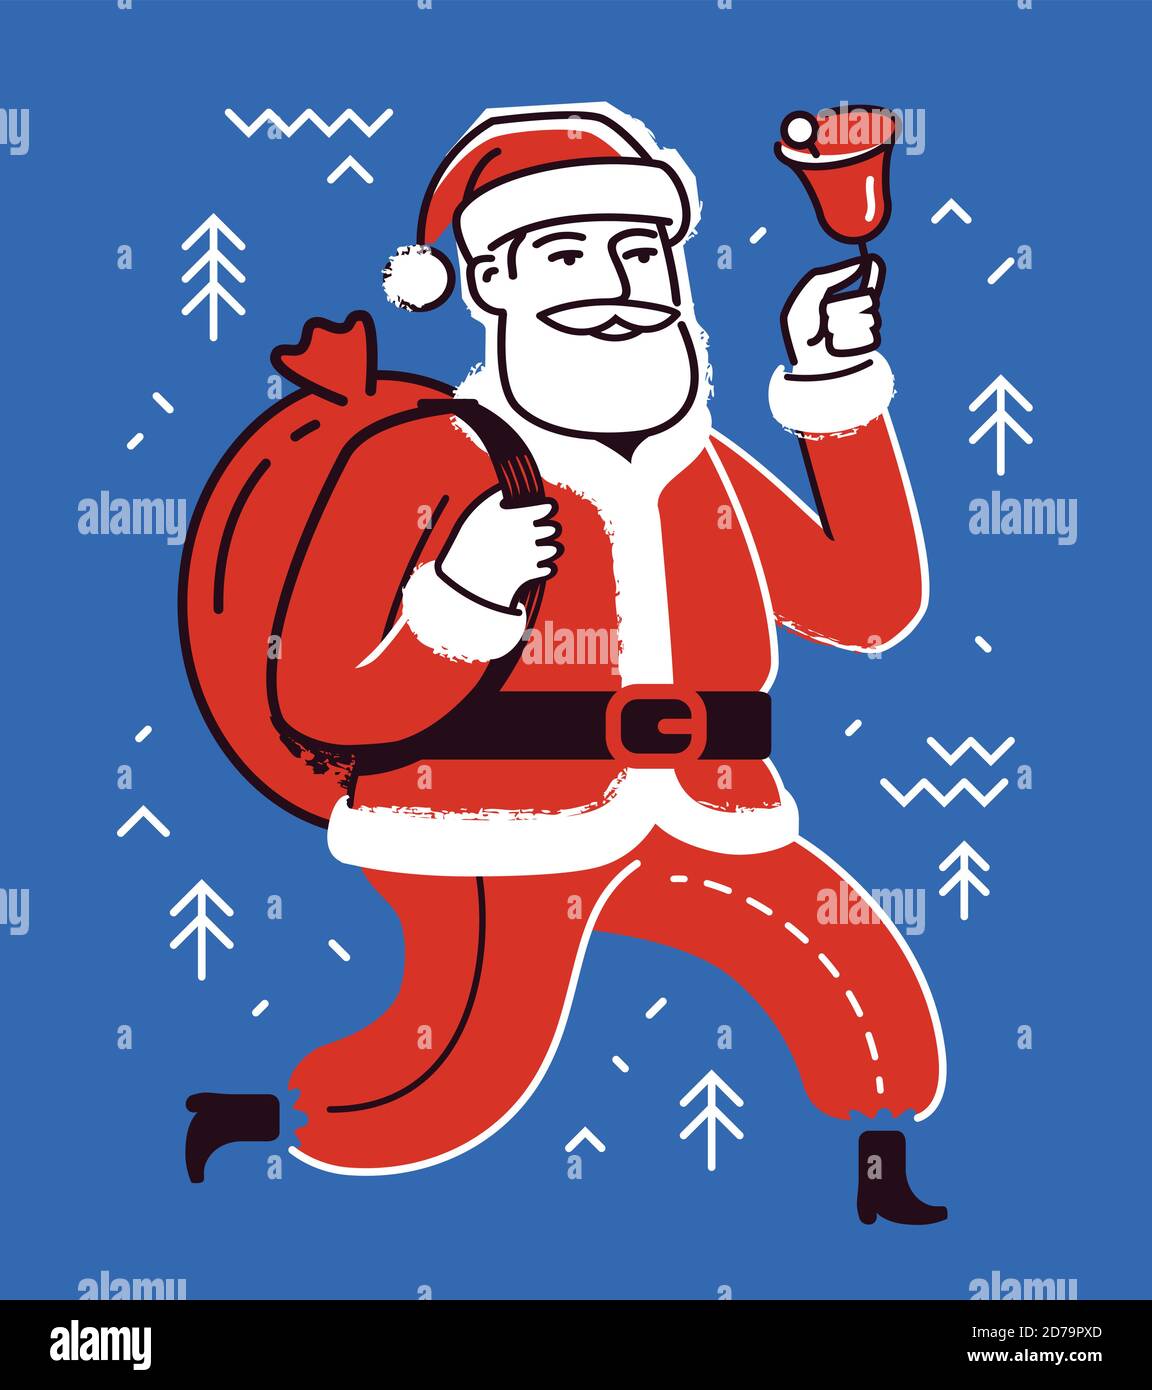 Weihnachtsmann. Weihnachtskonzept Vektor-Illustration in flachem Stil Stock Vektor